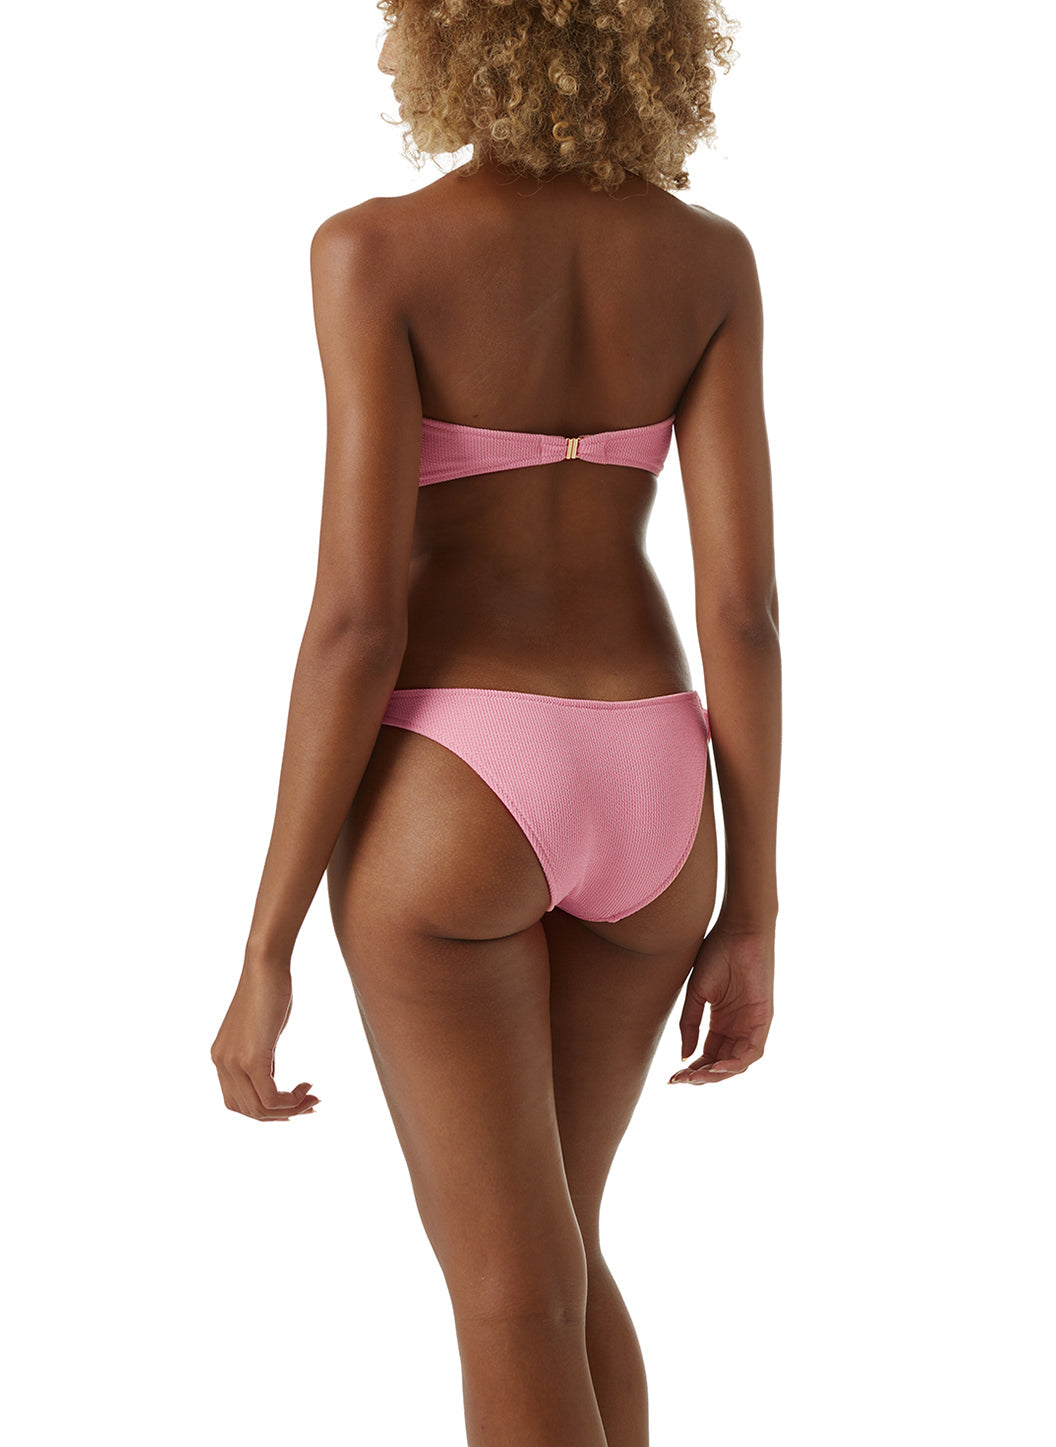 Tortola Rose Ridges Bikini Model B